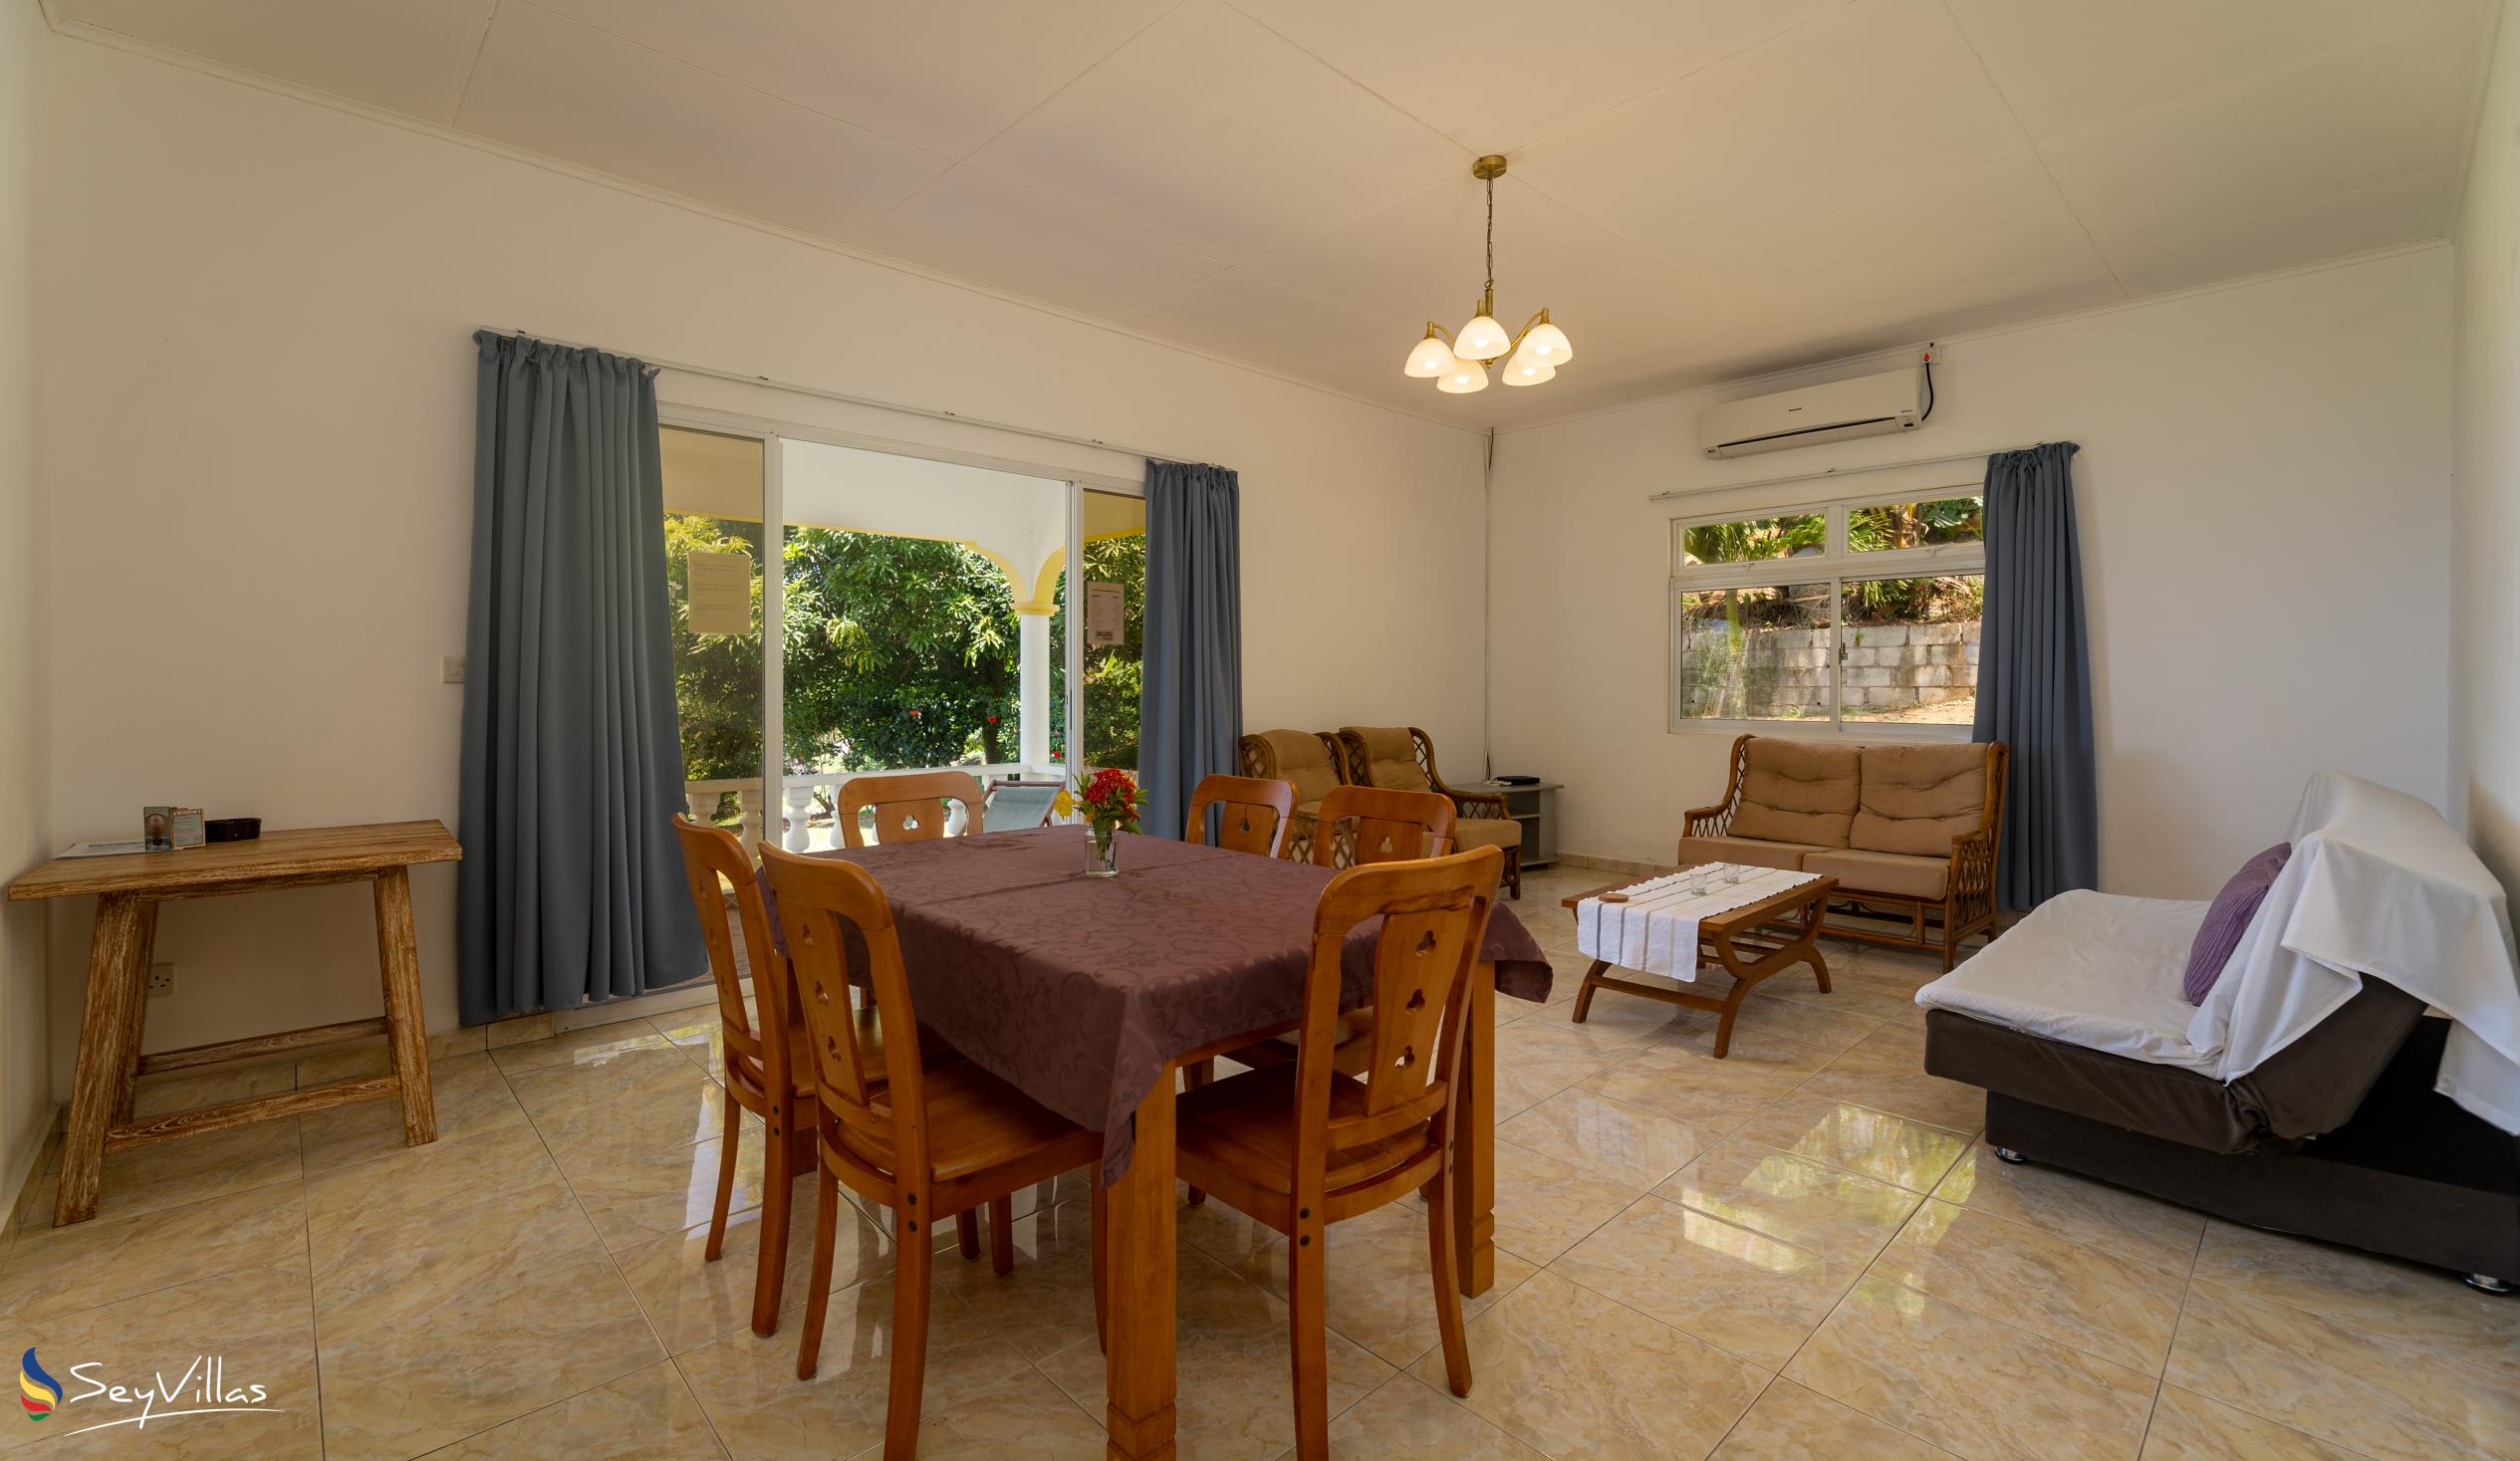 Foto 79: Maison Marikel - Villa mit 2 Schlafzimmern - Mahé (Seychellen)